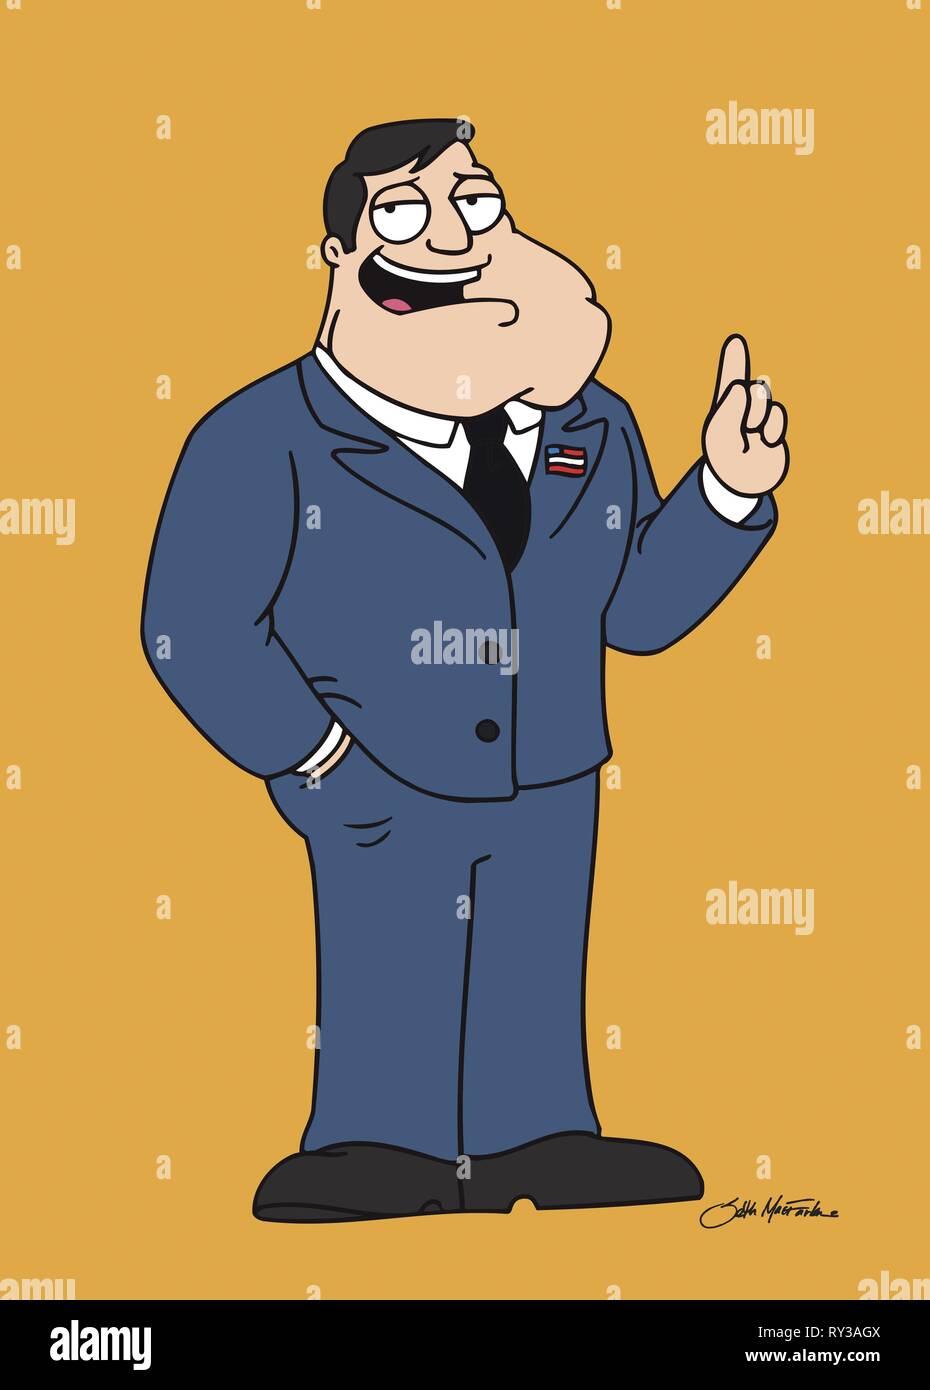 STAN SMITH, AMERICAN DAD!, 2005 Stock Photo - Alamy